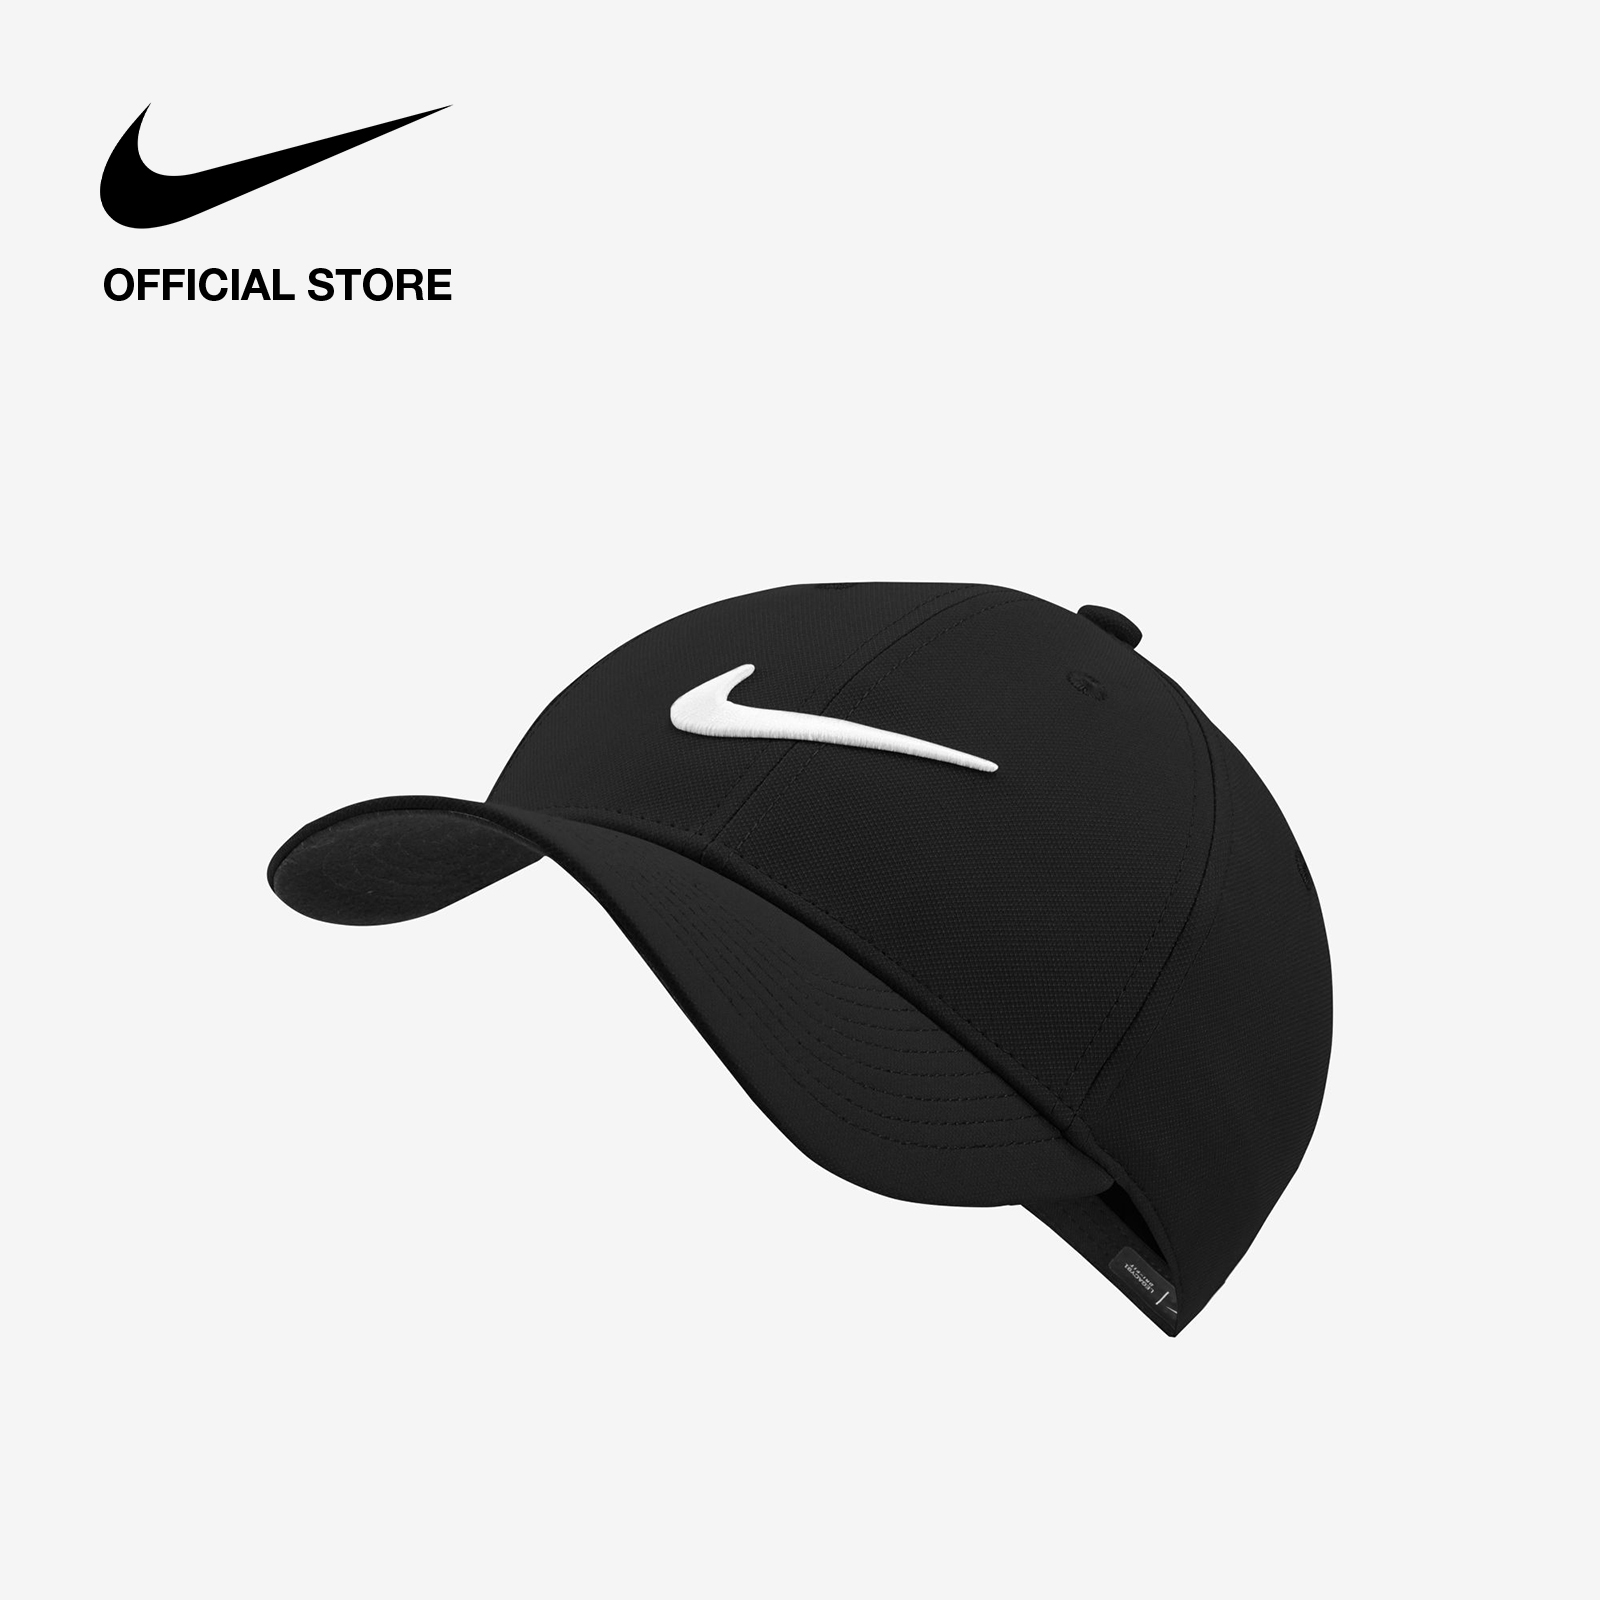 Nike Unisex Dri-FIT Legacy91 Cap - Black หมวกแก๊ปยูนิเซ็กส์ Nike Dri-FIT Legacy91 - สีดำ